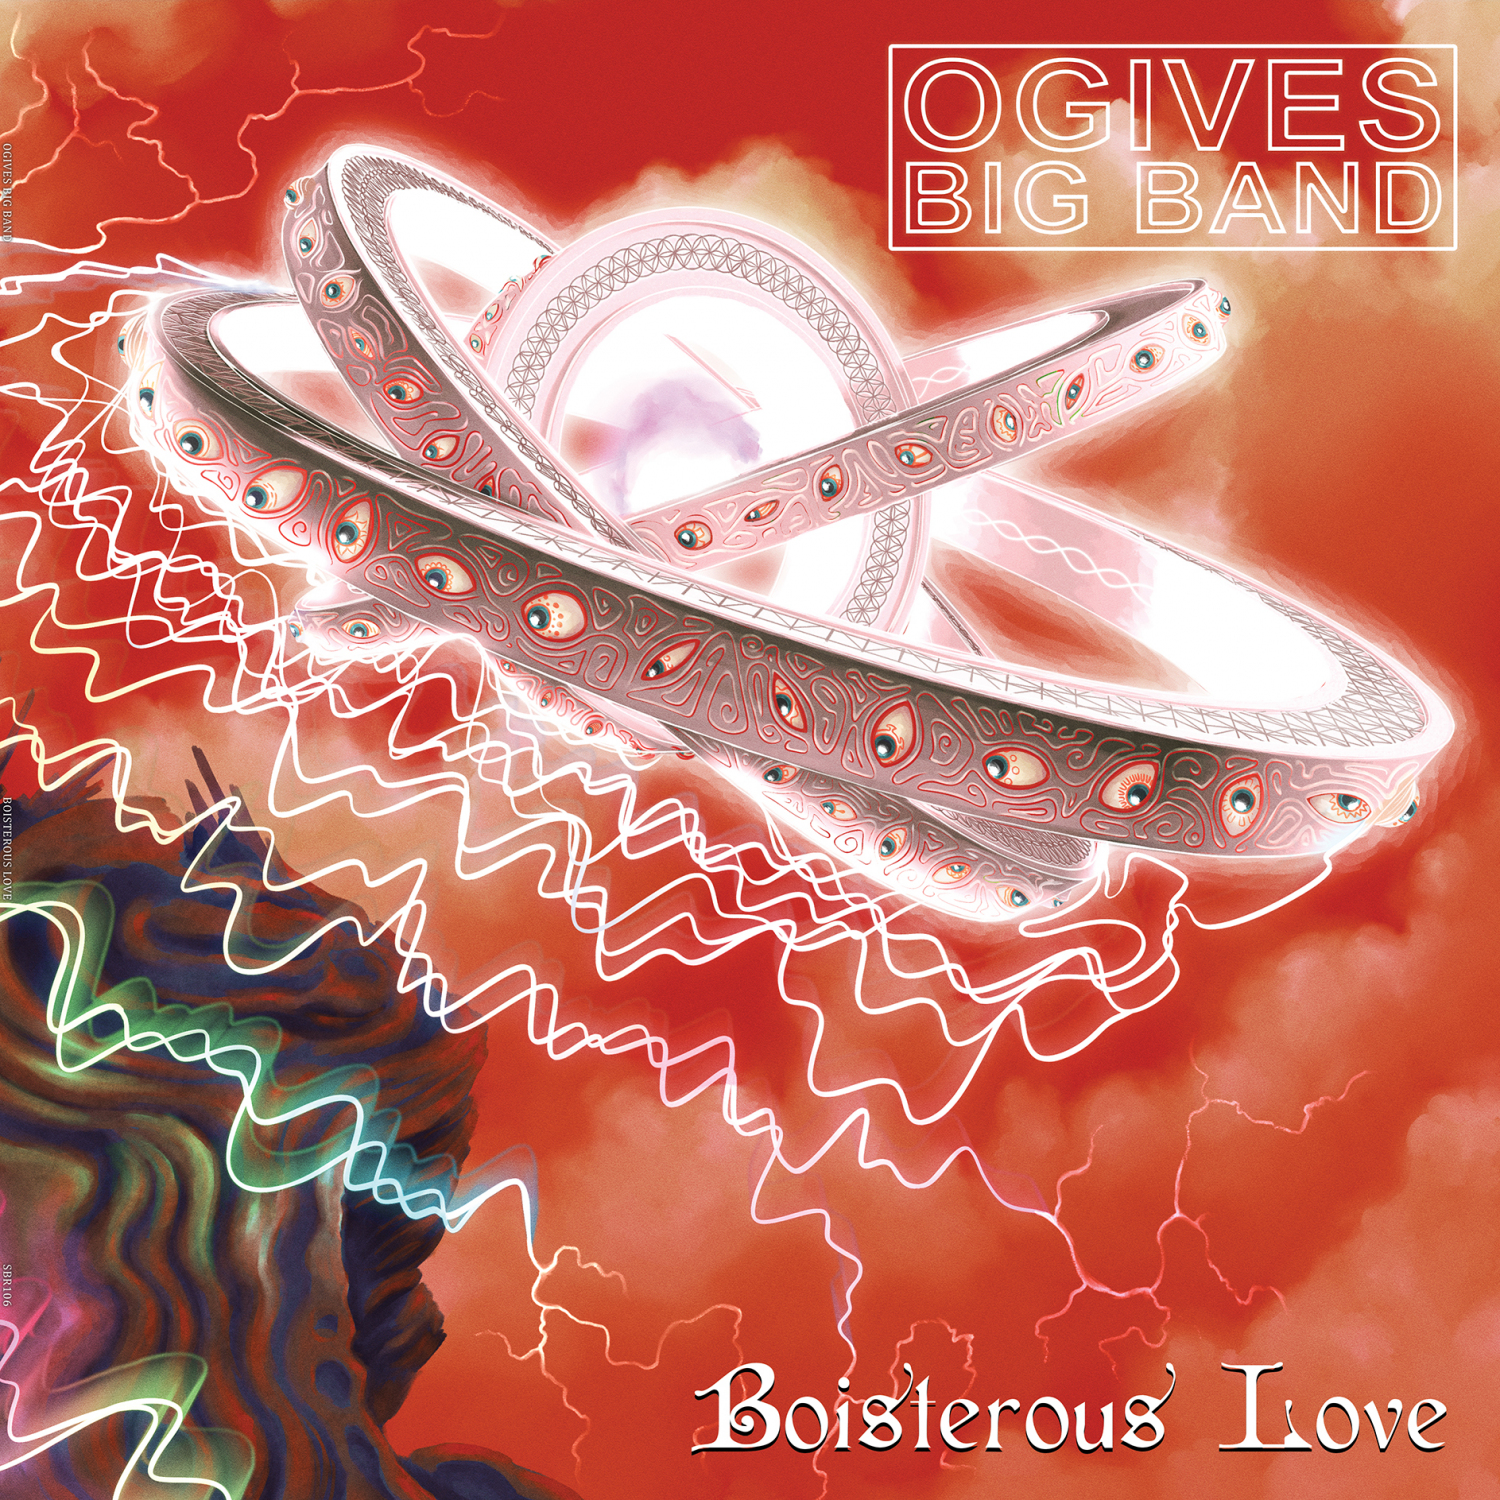 OGIVES BIG BAND – BOISTEROUS LOVE